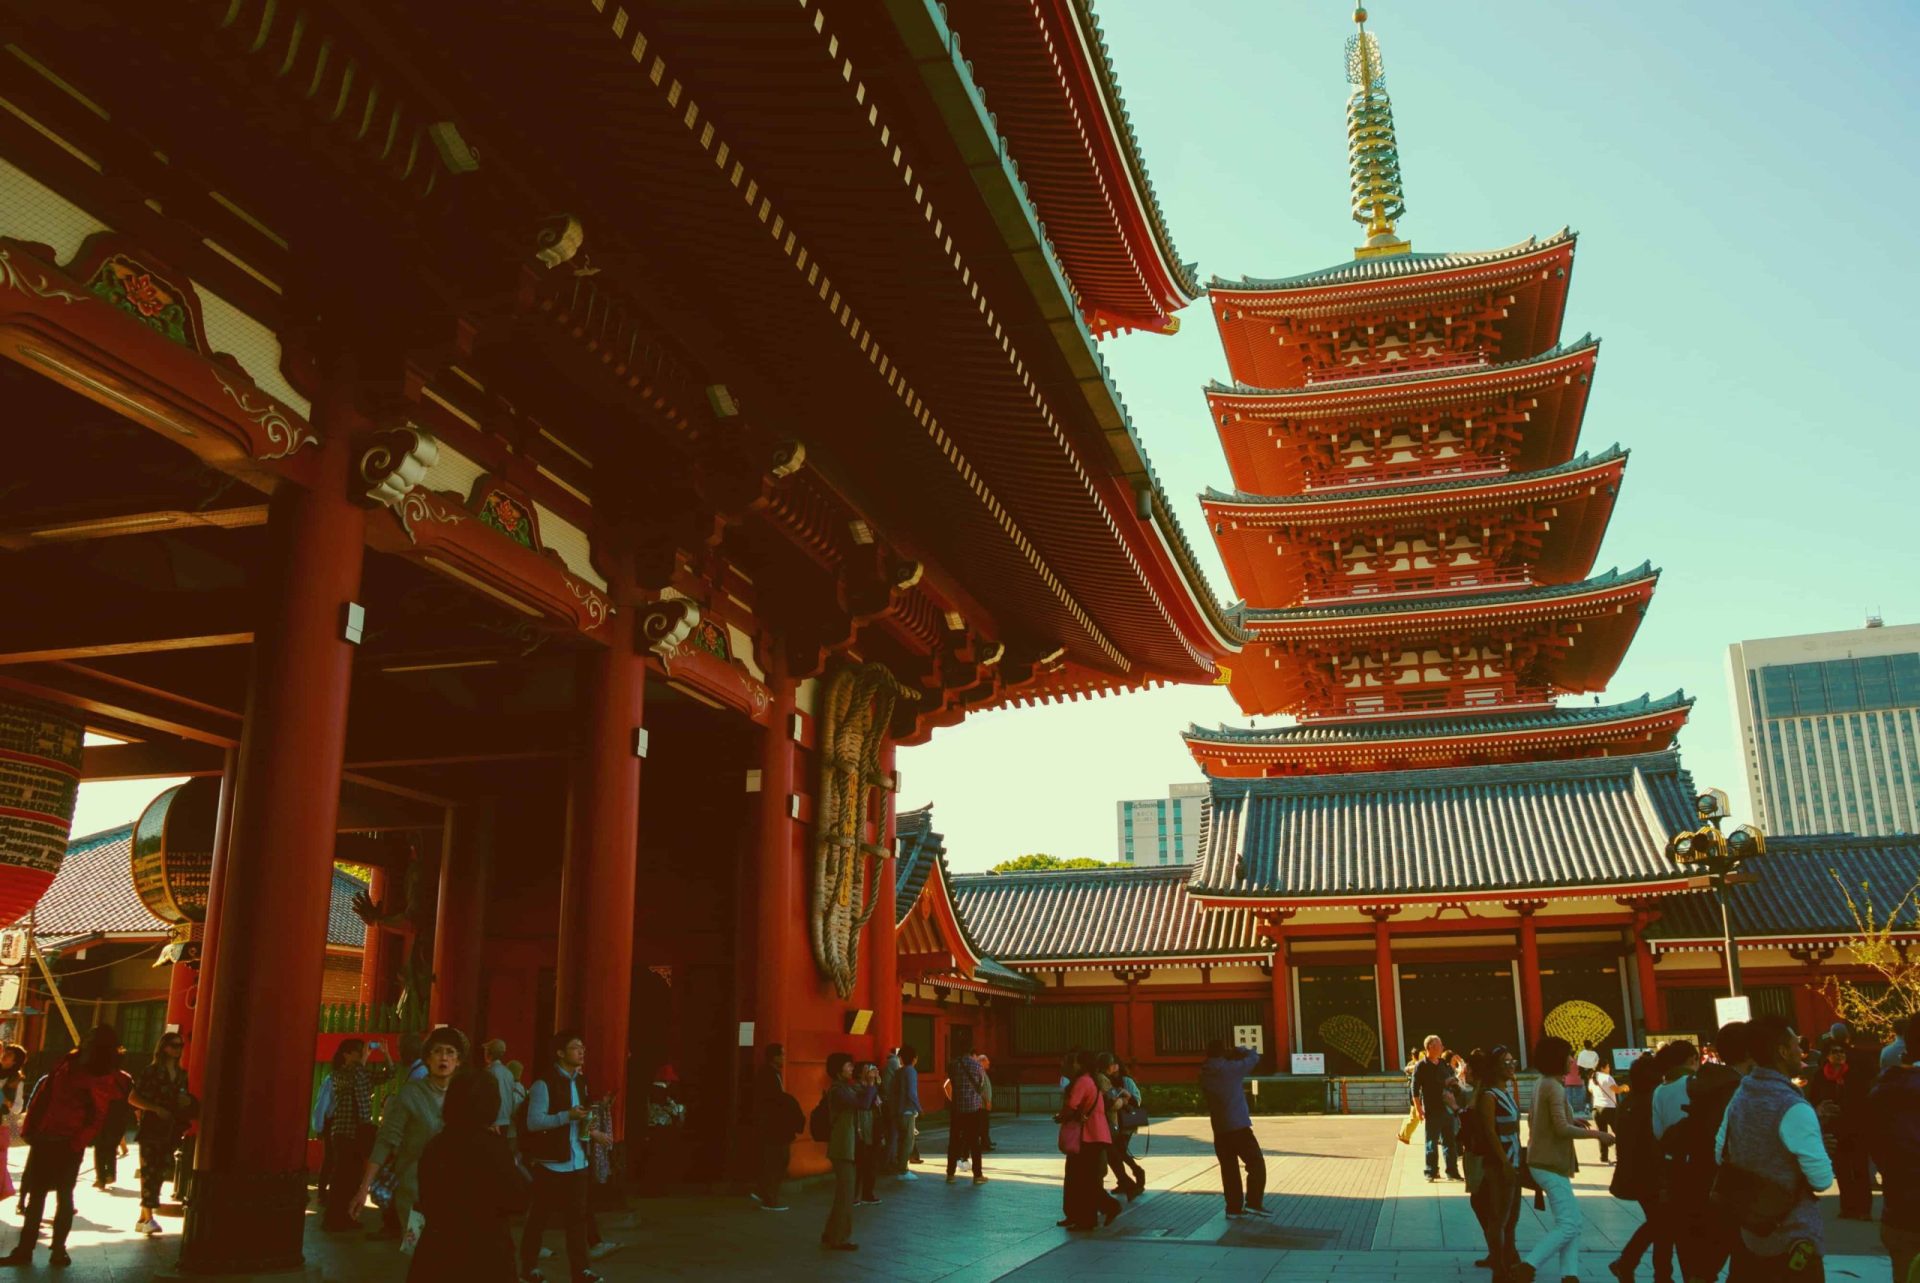 Sensoji temple in Japan with tourists